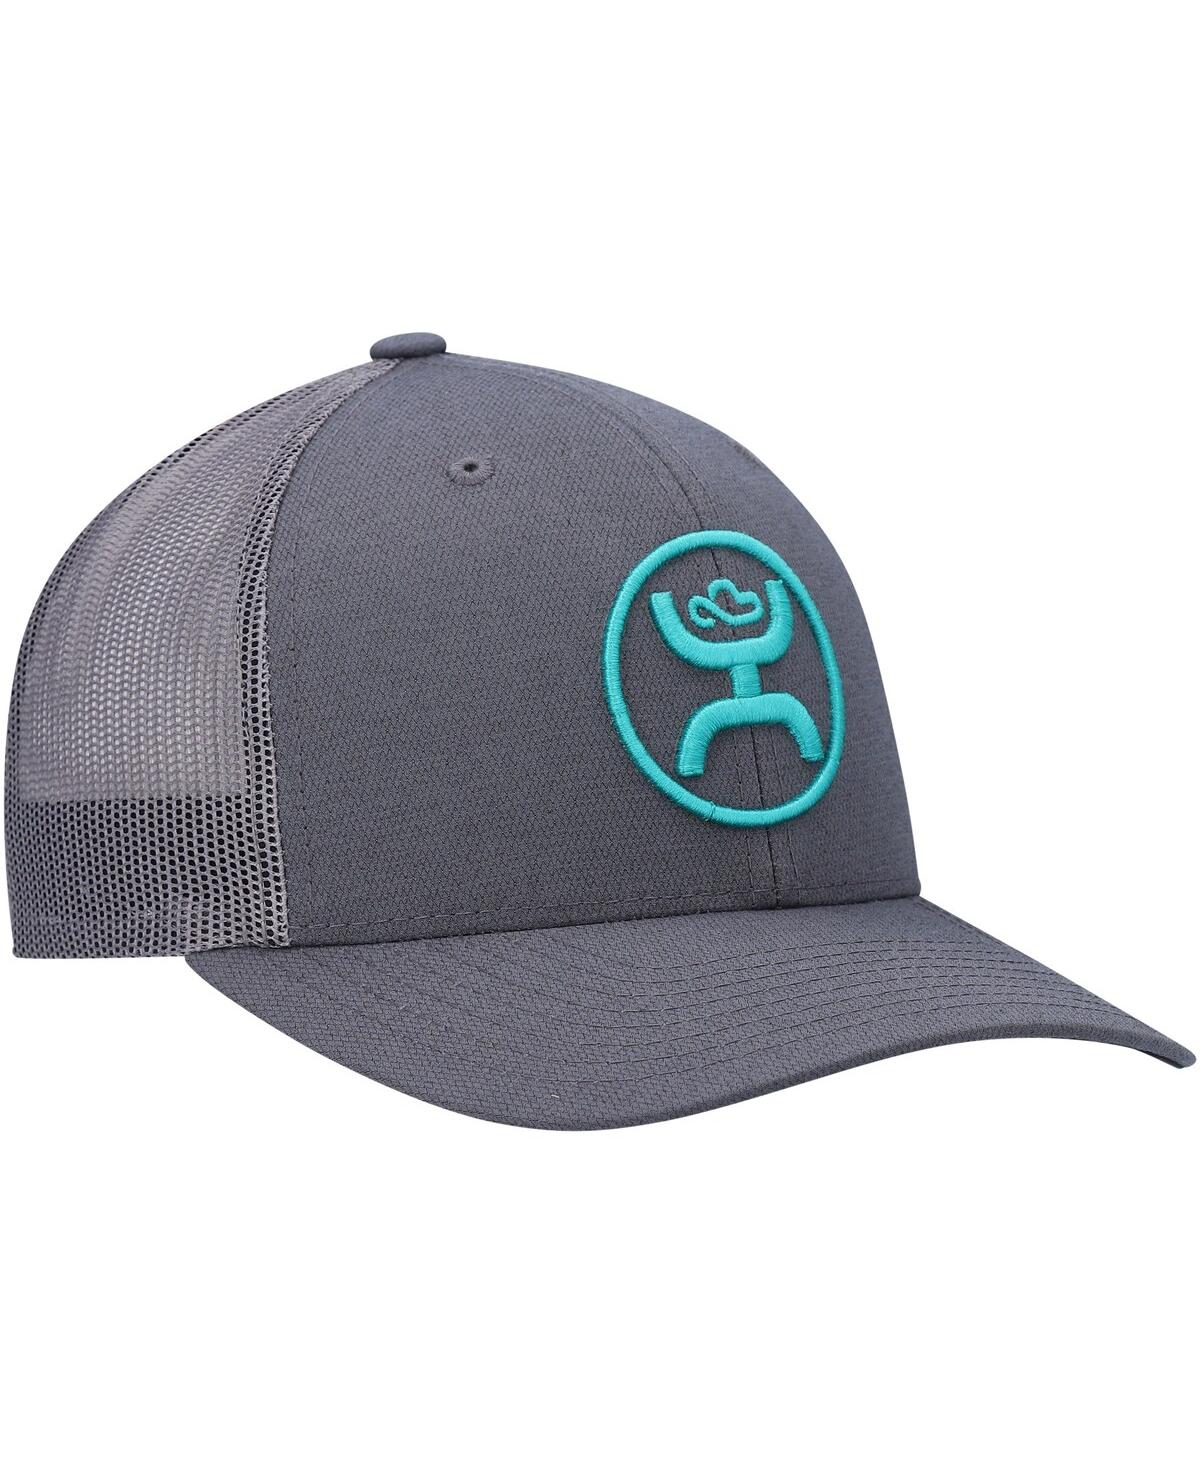 Shop Hooey Men's  Graphite O Classic Trucker Snapback Hat